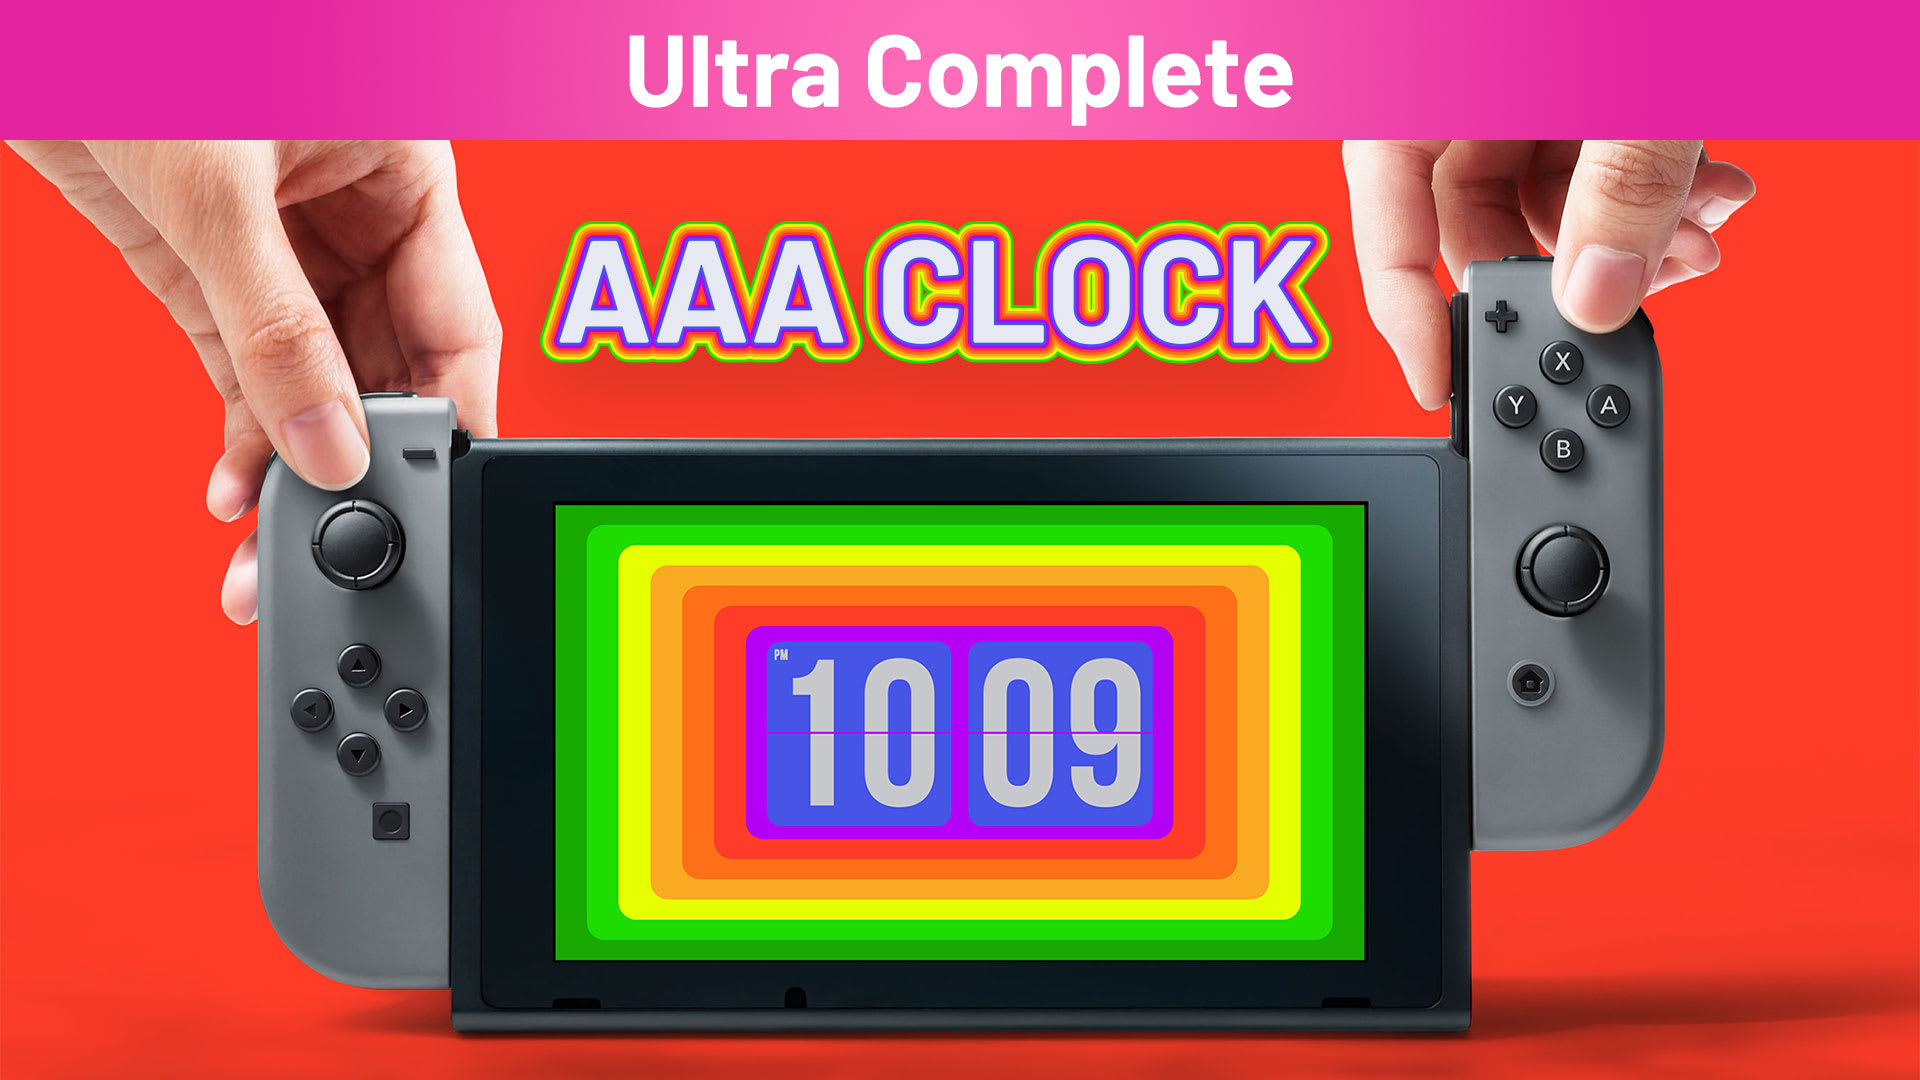 AAA Clock Ultra Complete